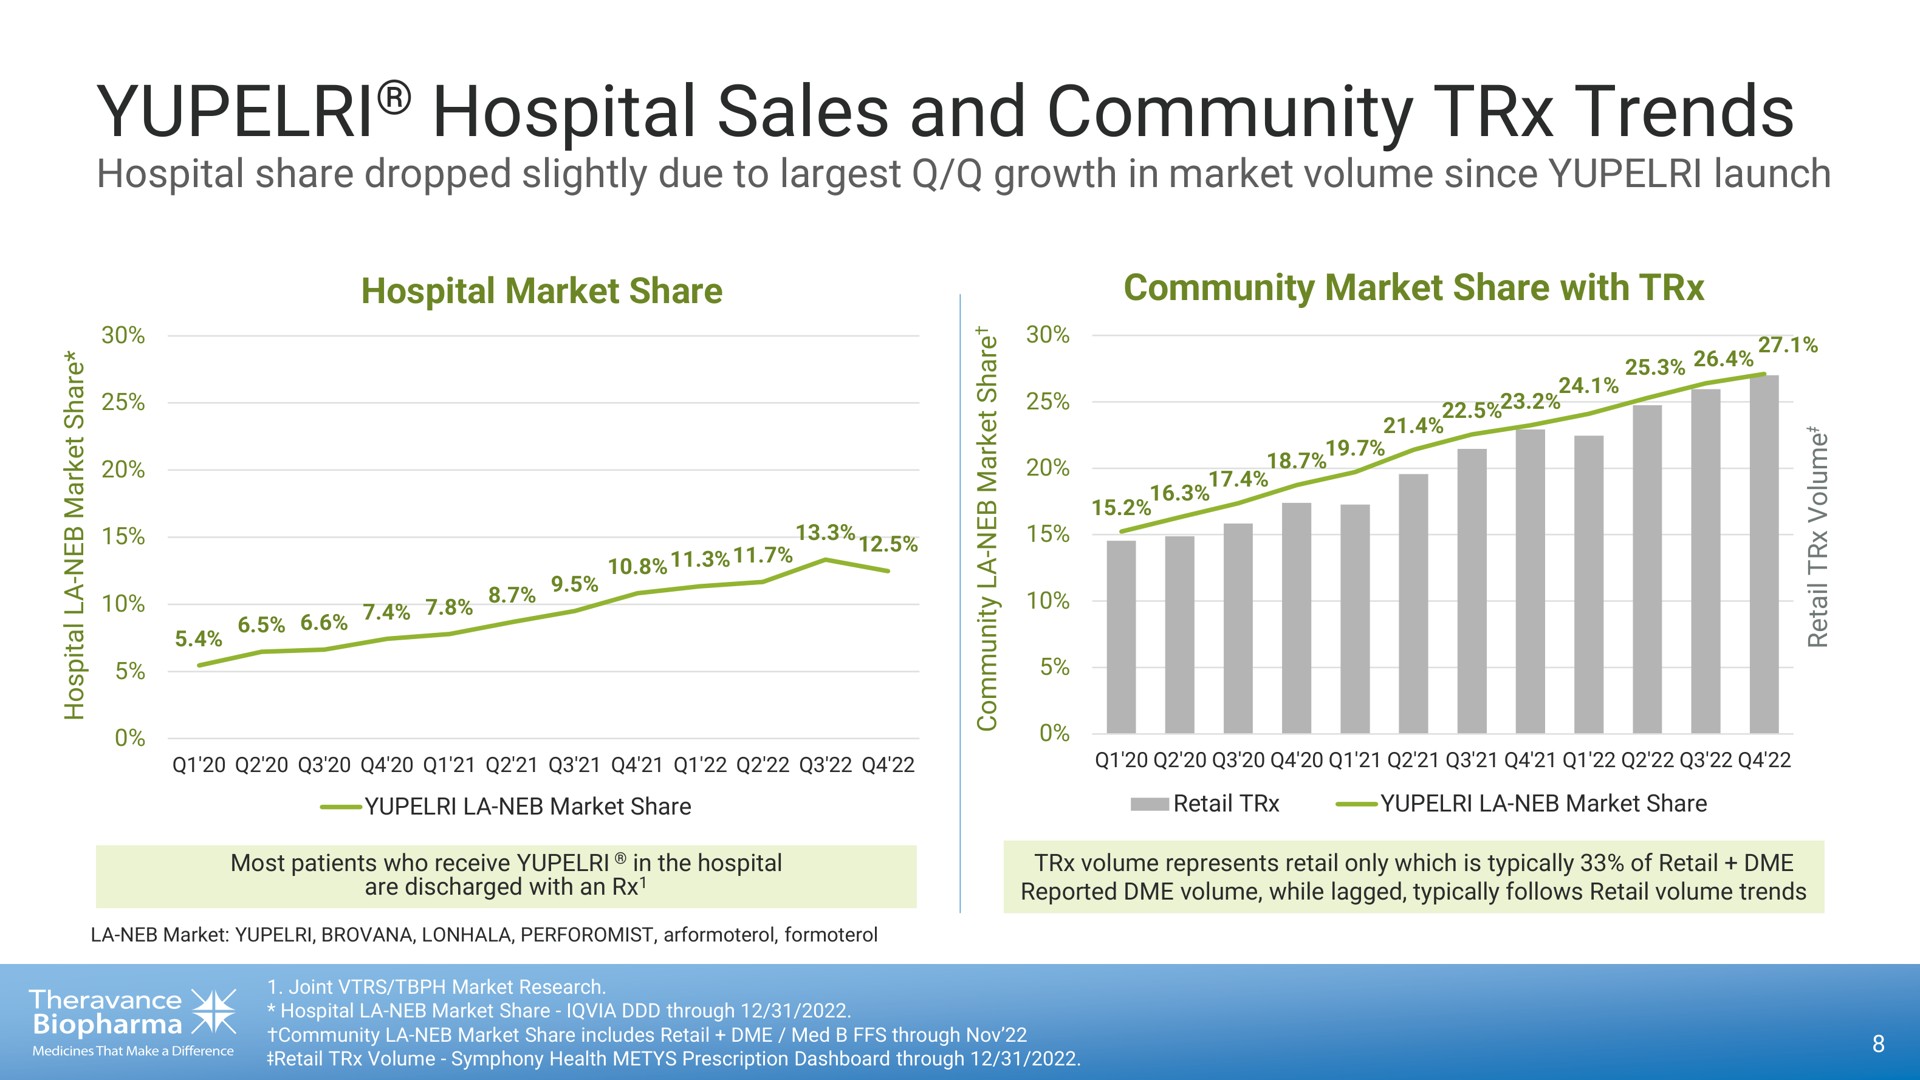 hospital sales and community trends | Theravance Biopharma